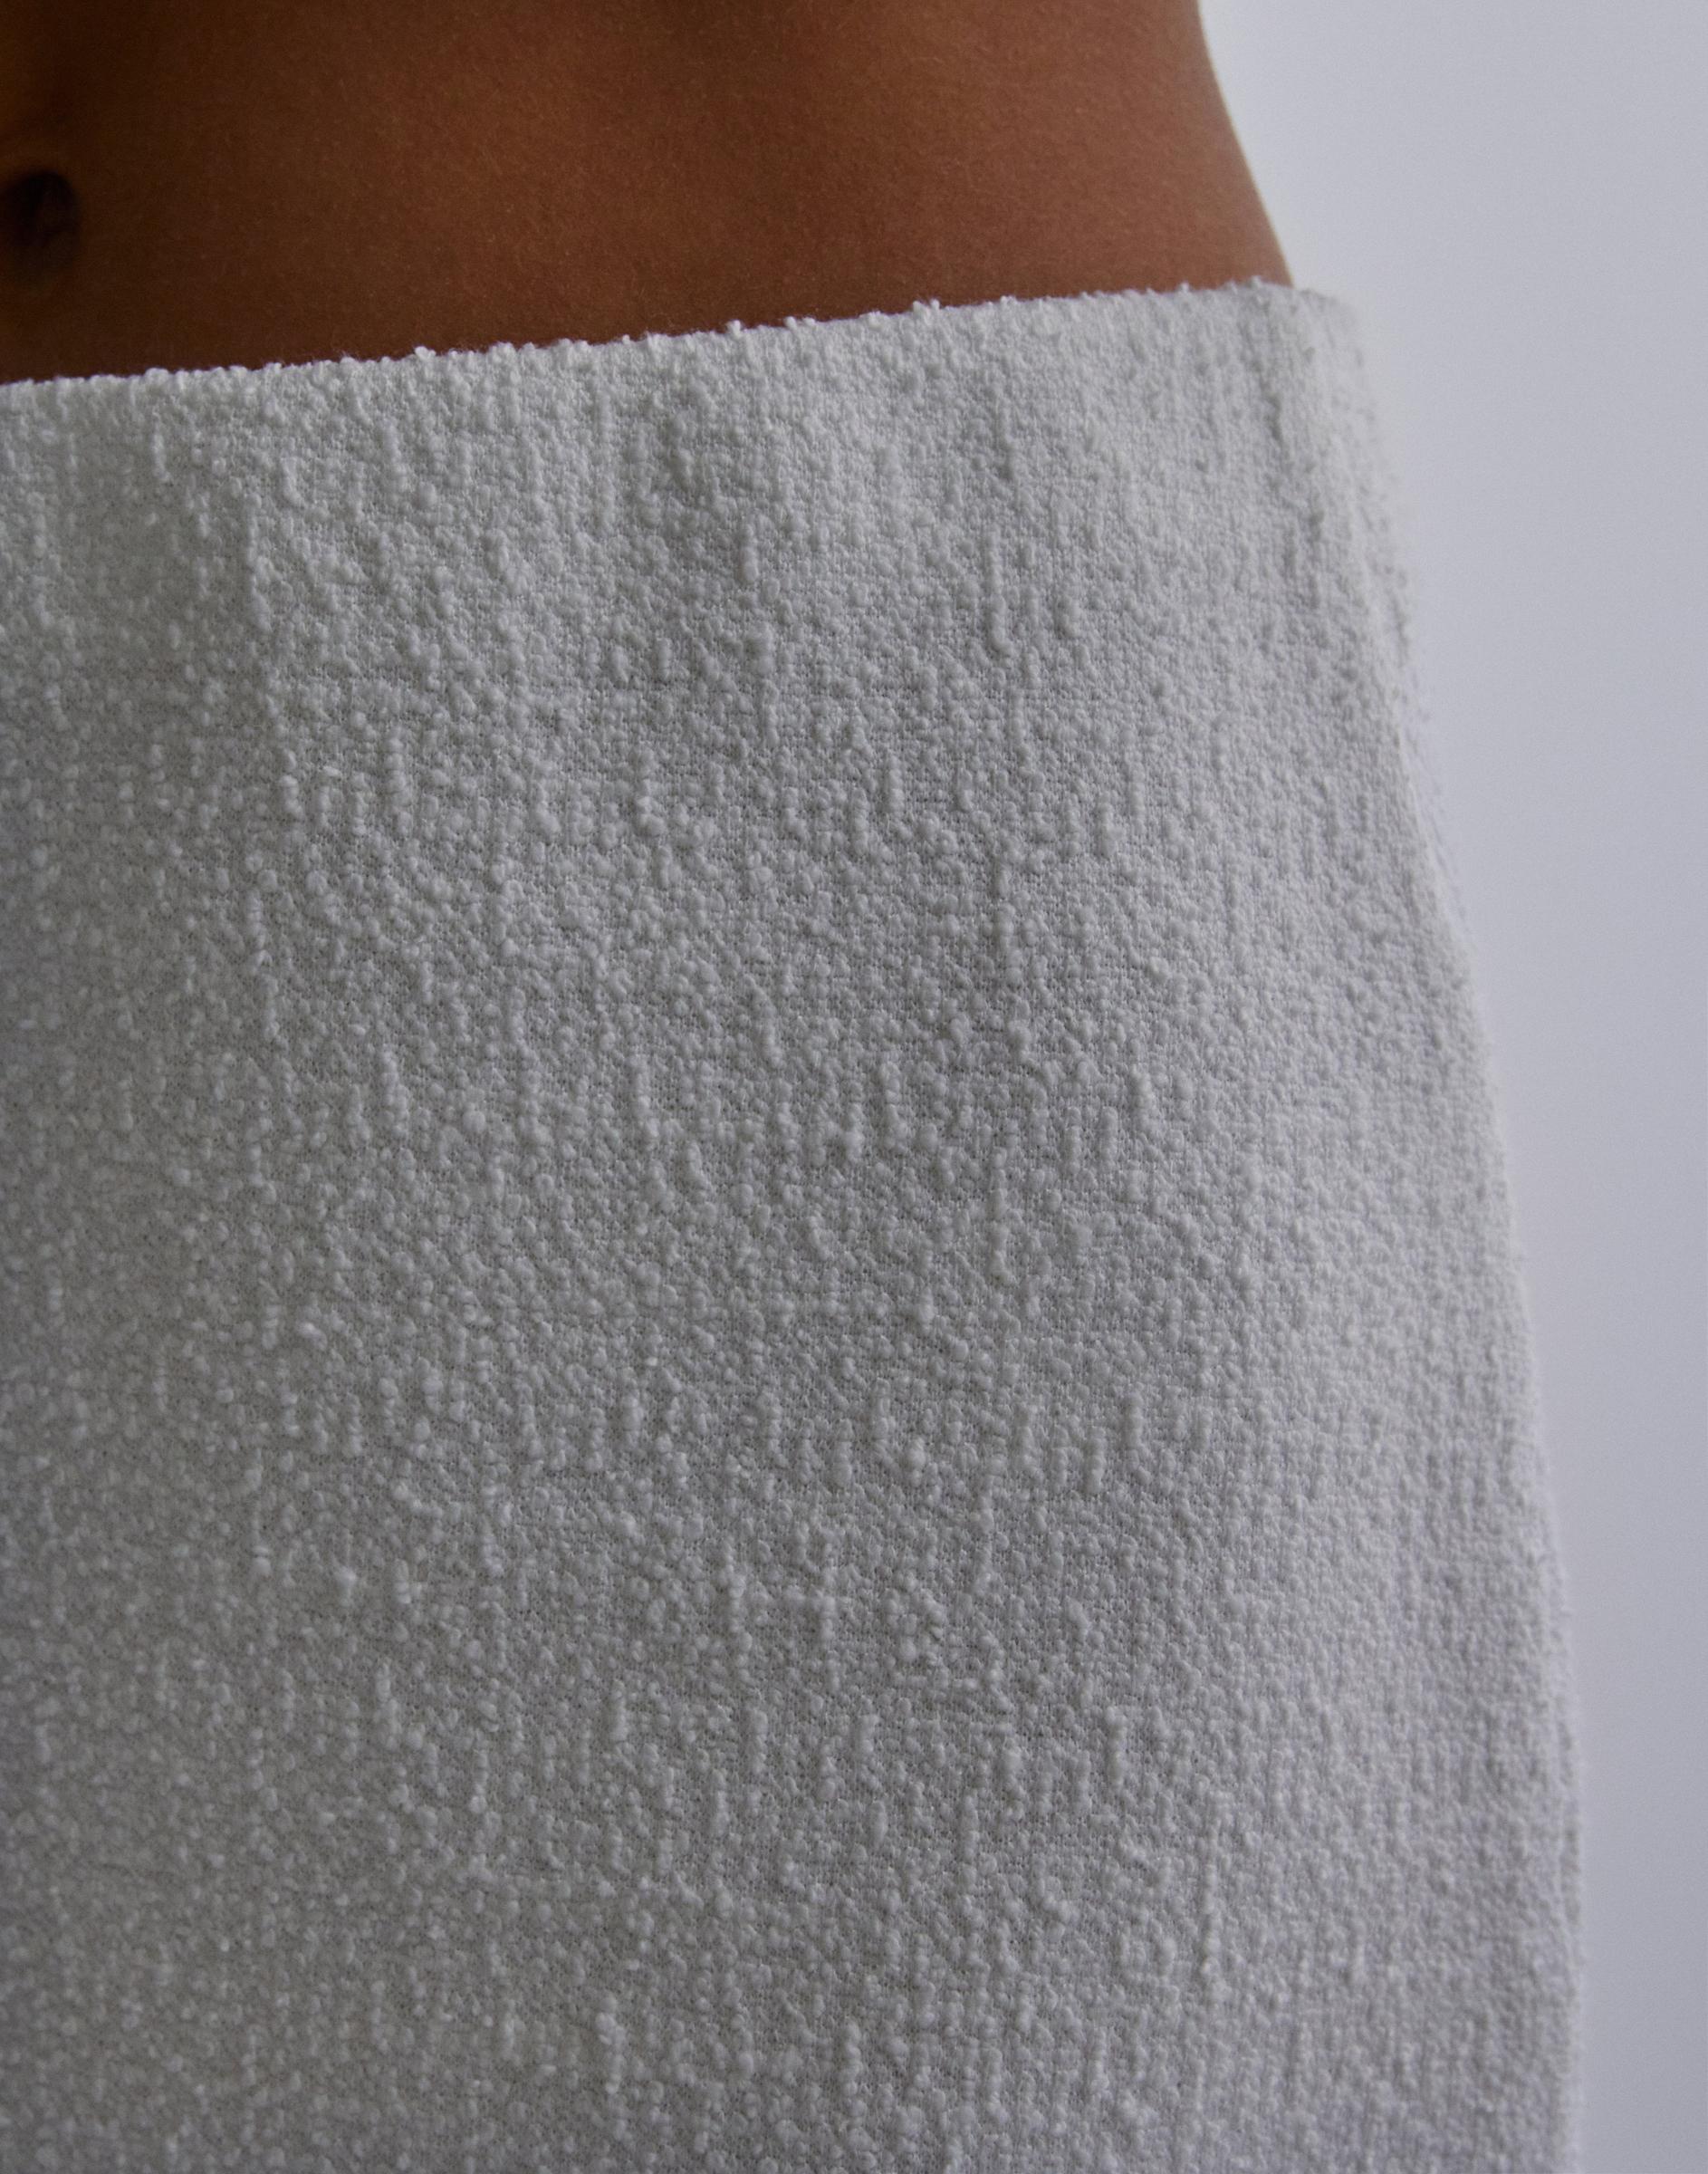 biała maxi spódnica dzianina tekstura rozporek